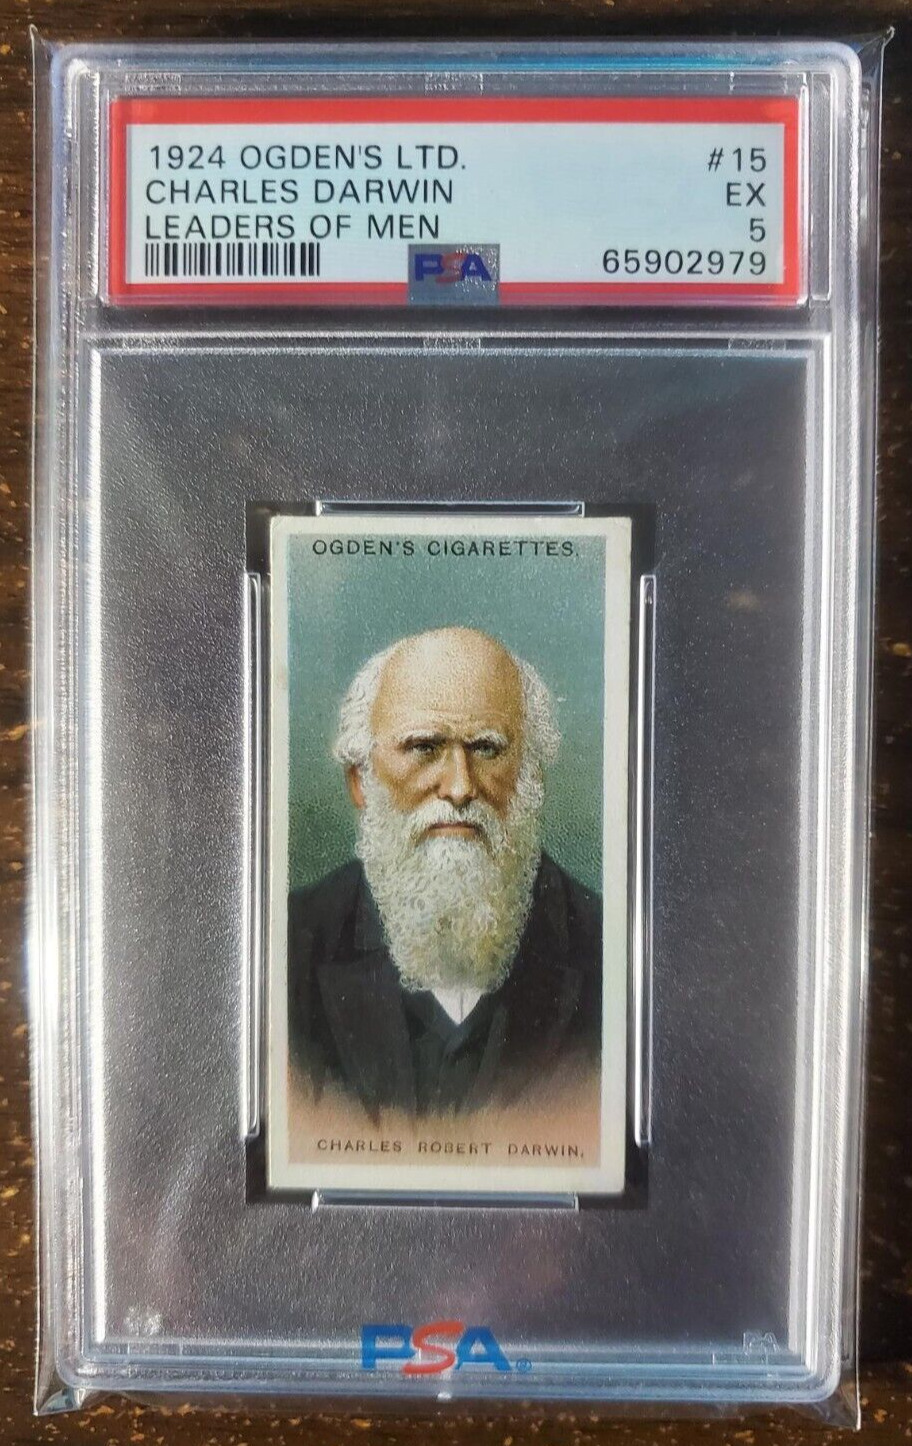 Charles Darwin - 1924 Ogden's Ltd. - Leaders of Men - #15 - PSA 5...